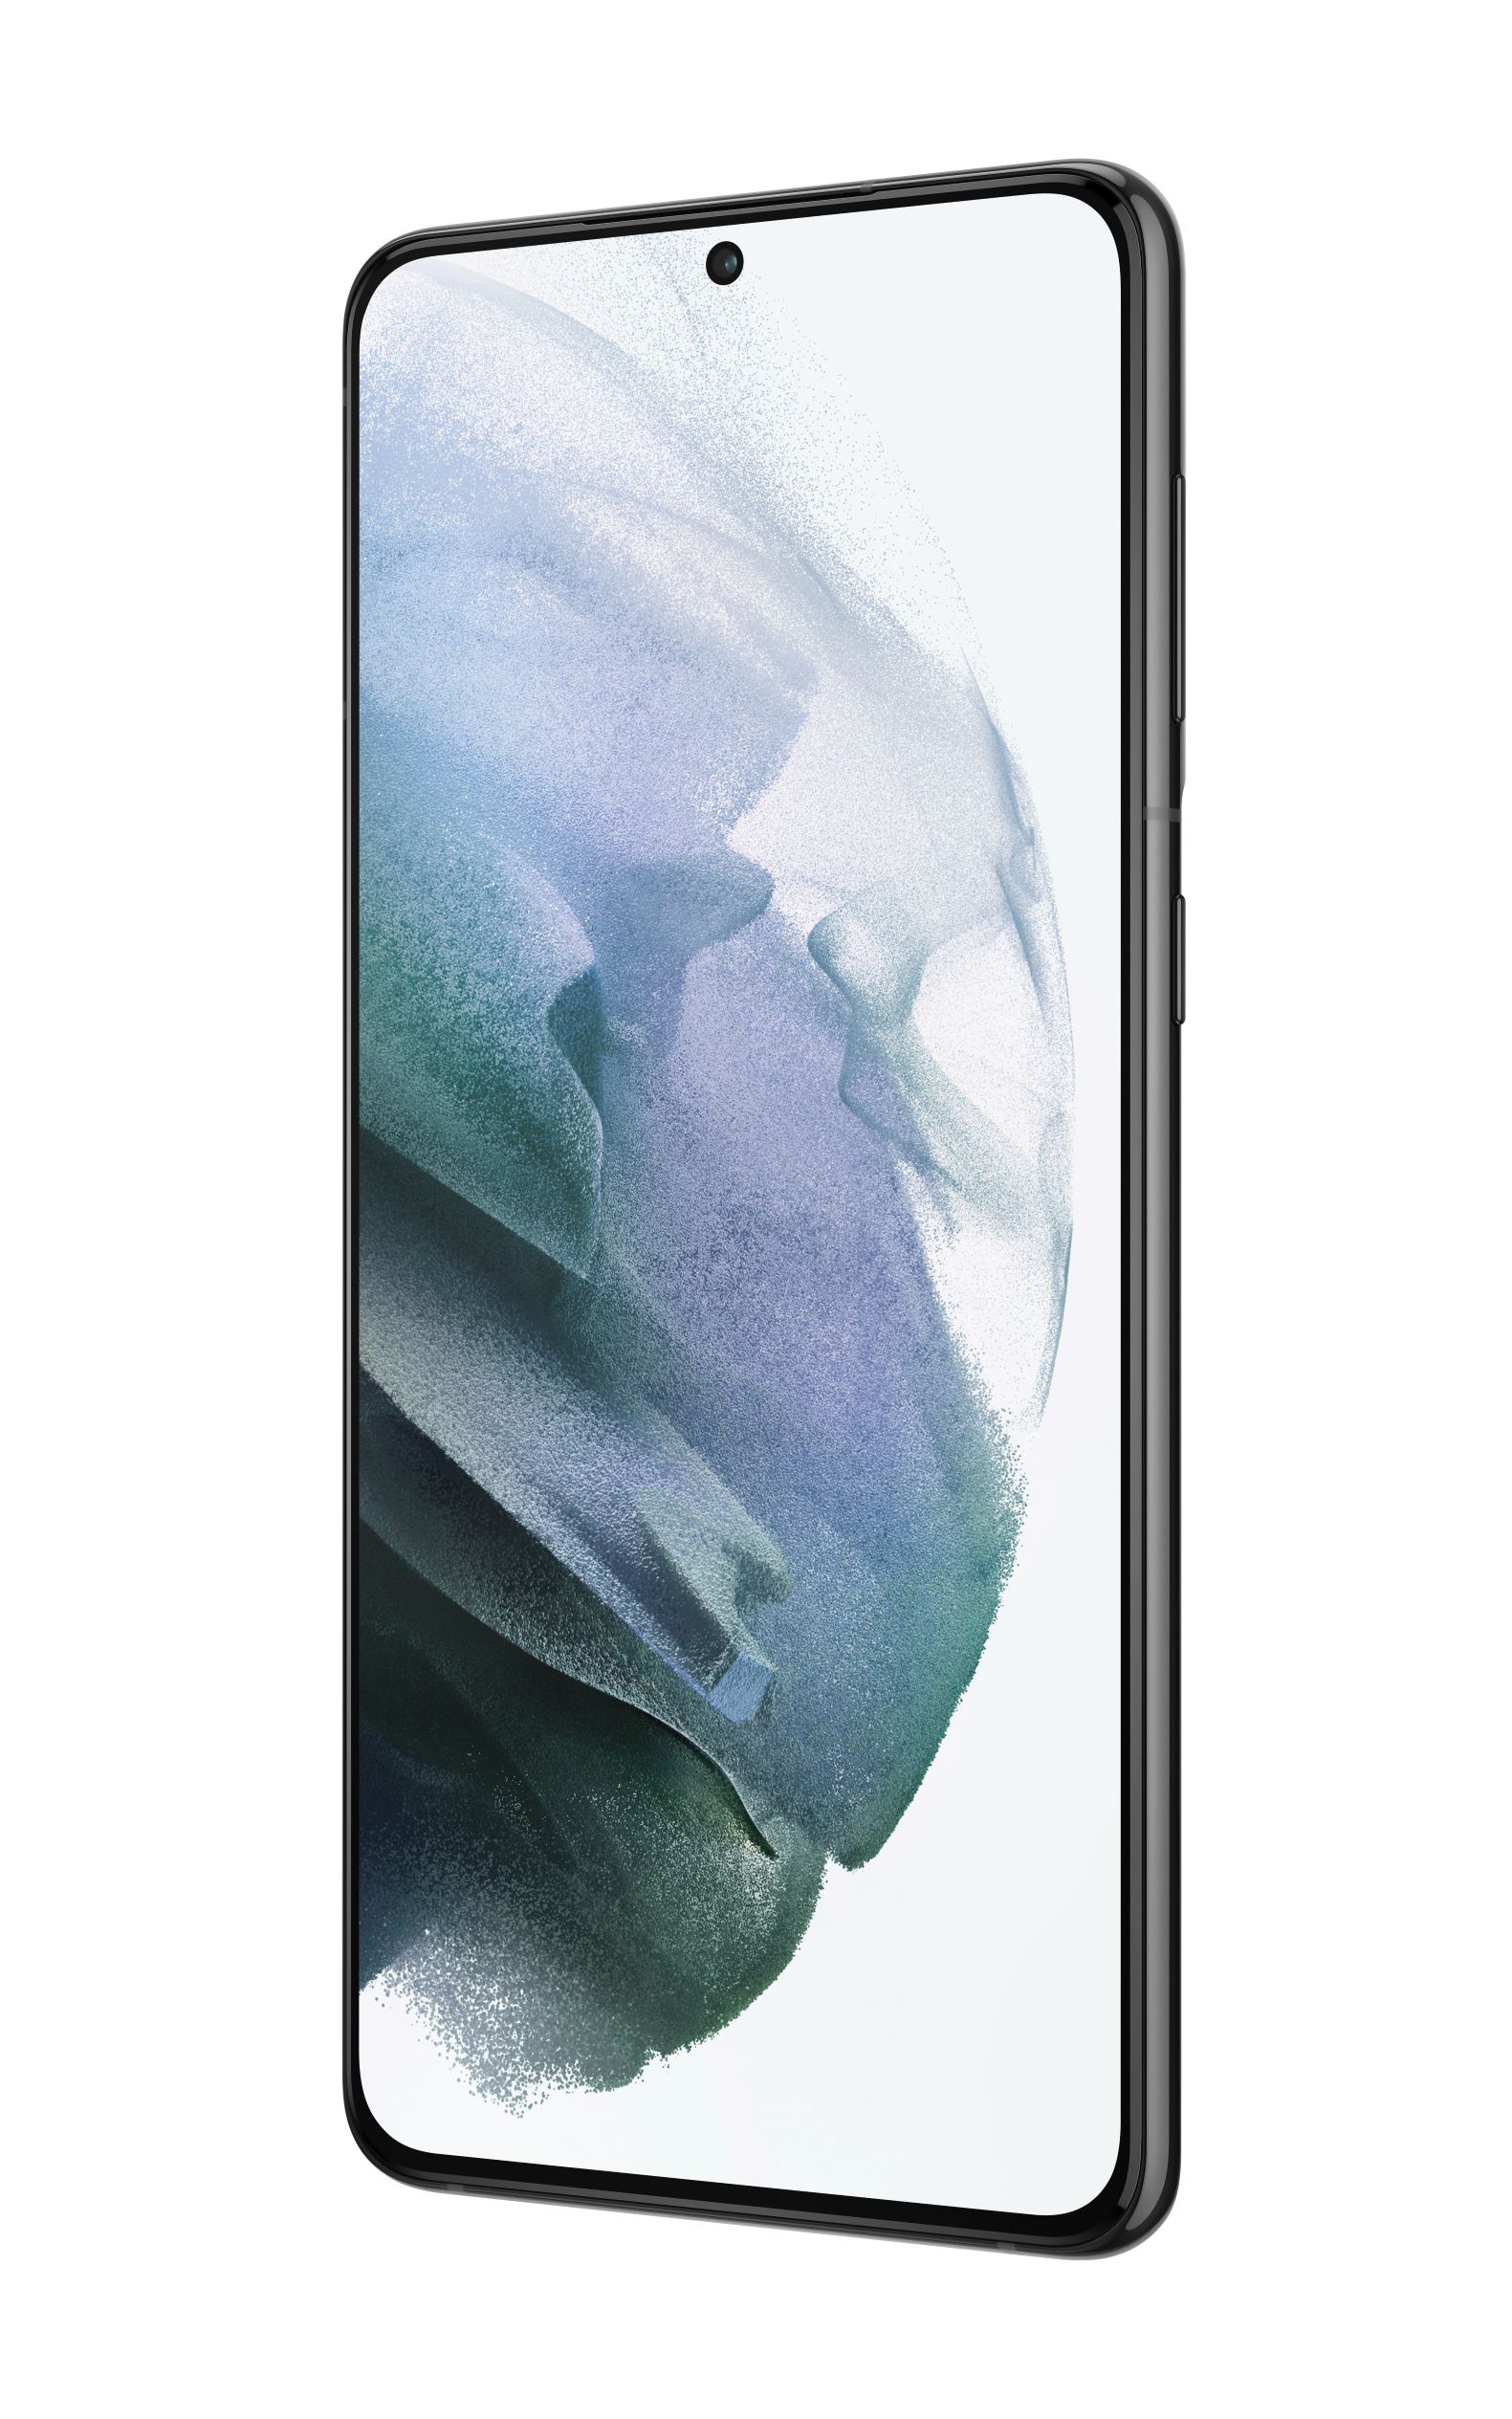 AT&T Samsung Galaxy S21+ 5G Black 128GB - image 2 of 2